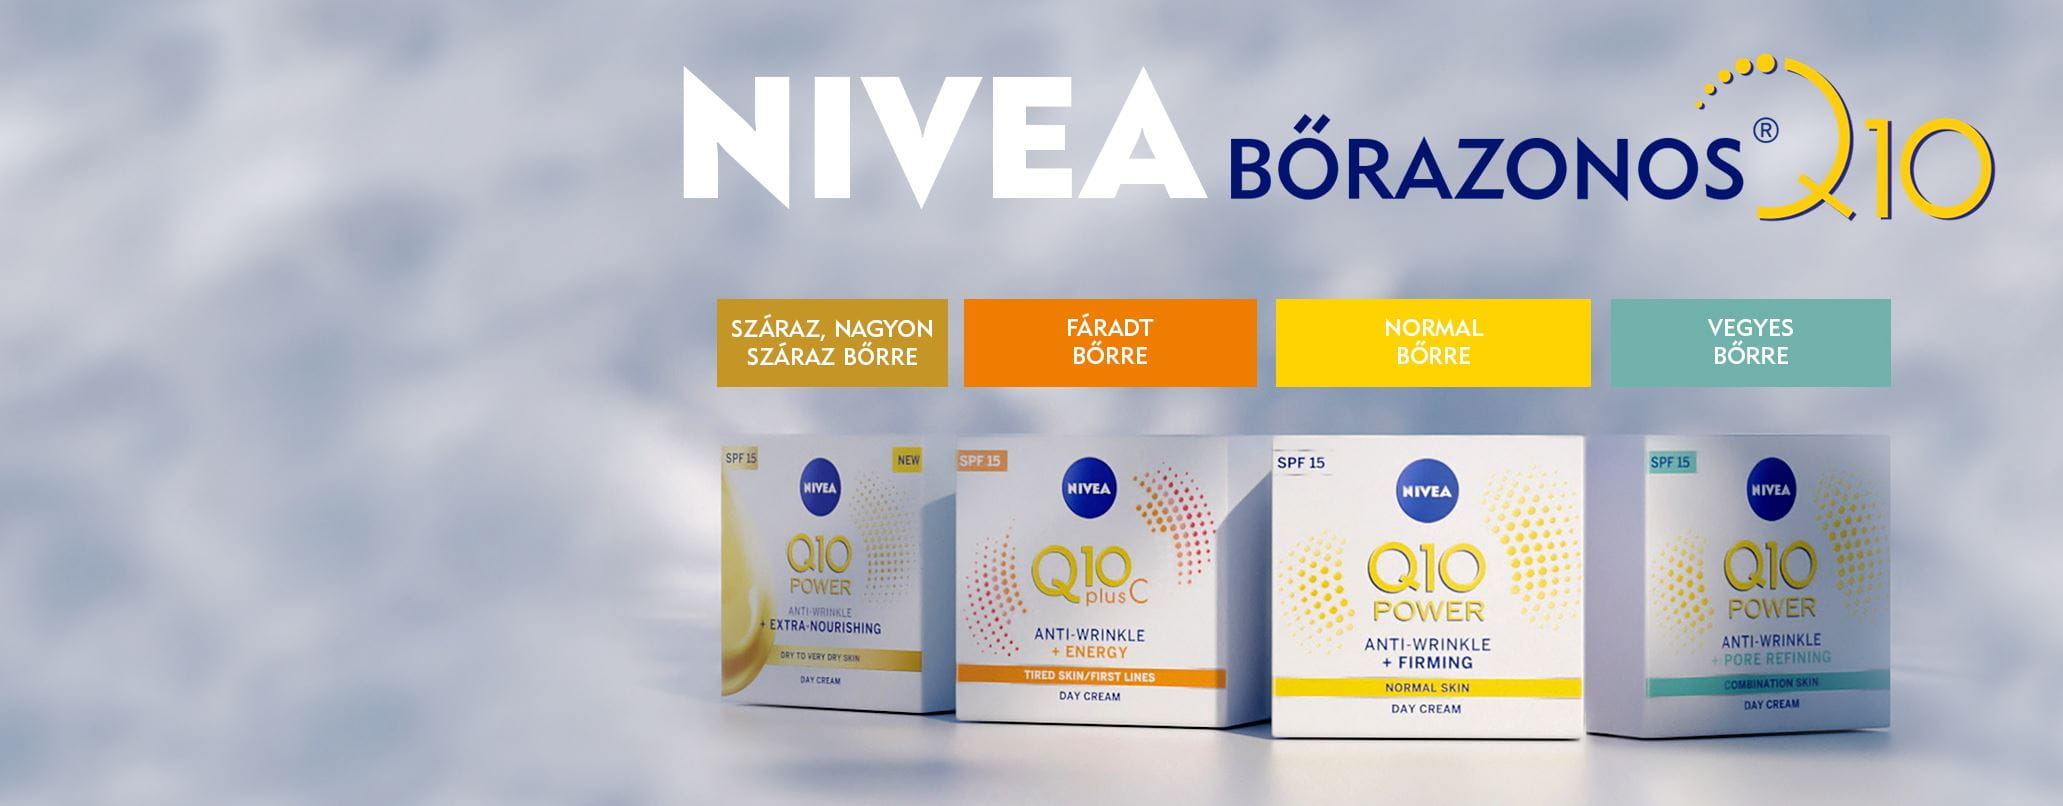 Products - NIVEA